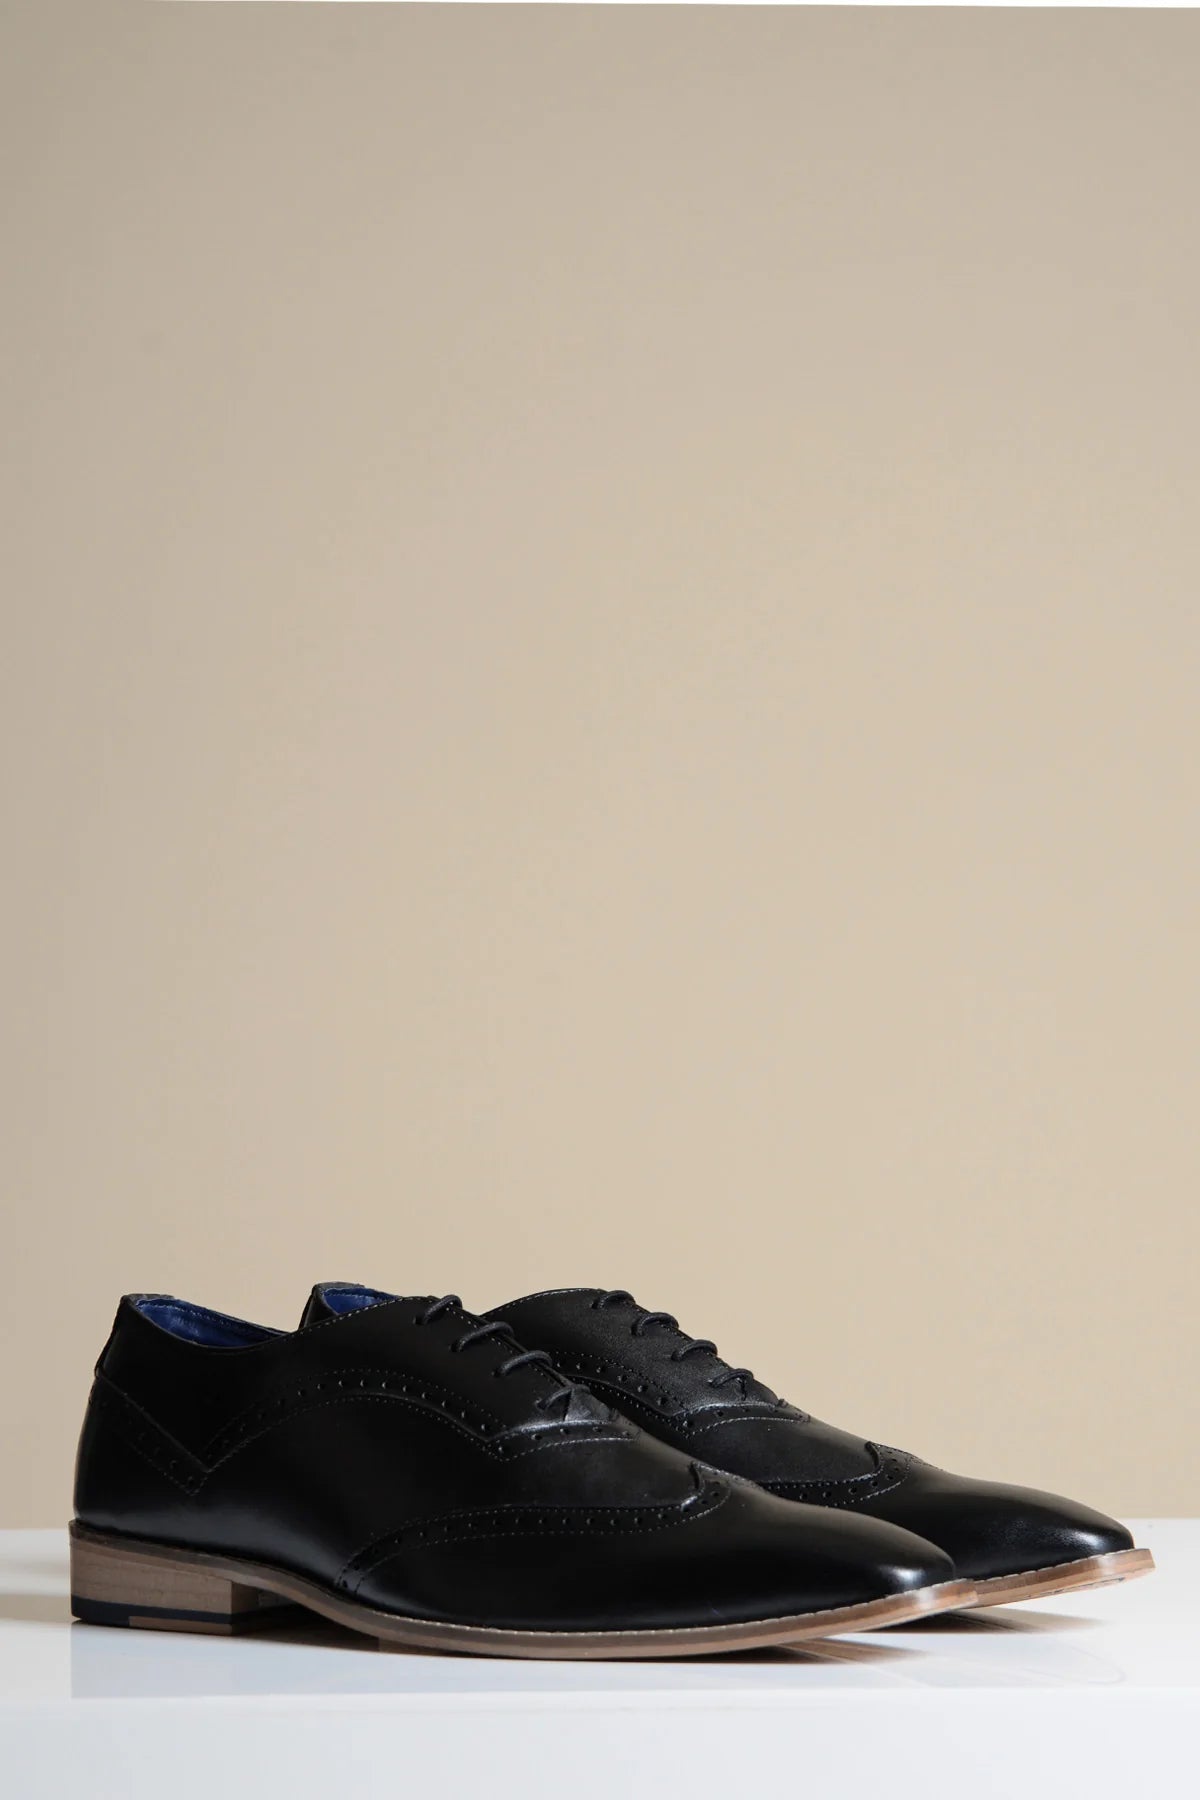 Black leather shoes, Marc Darcy Dawson - Wingtip brogue